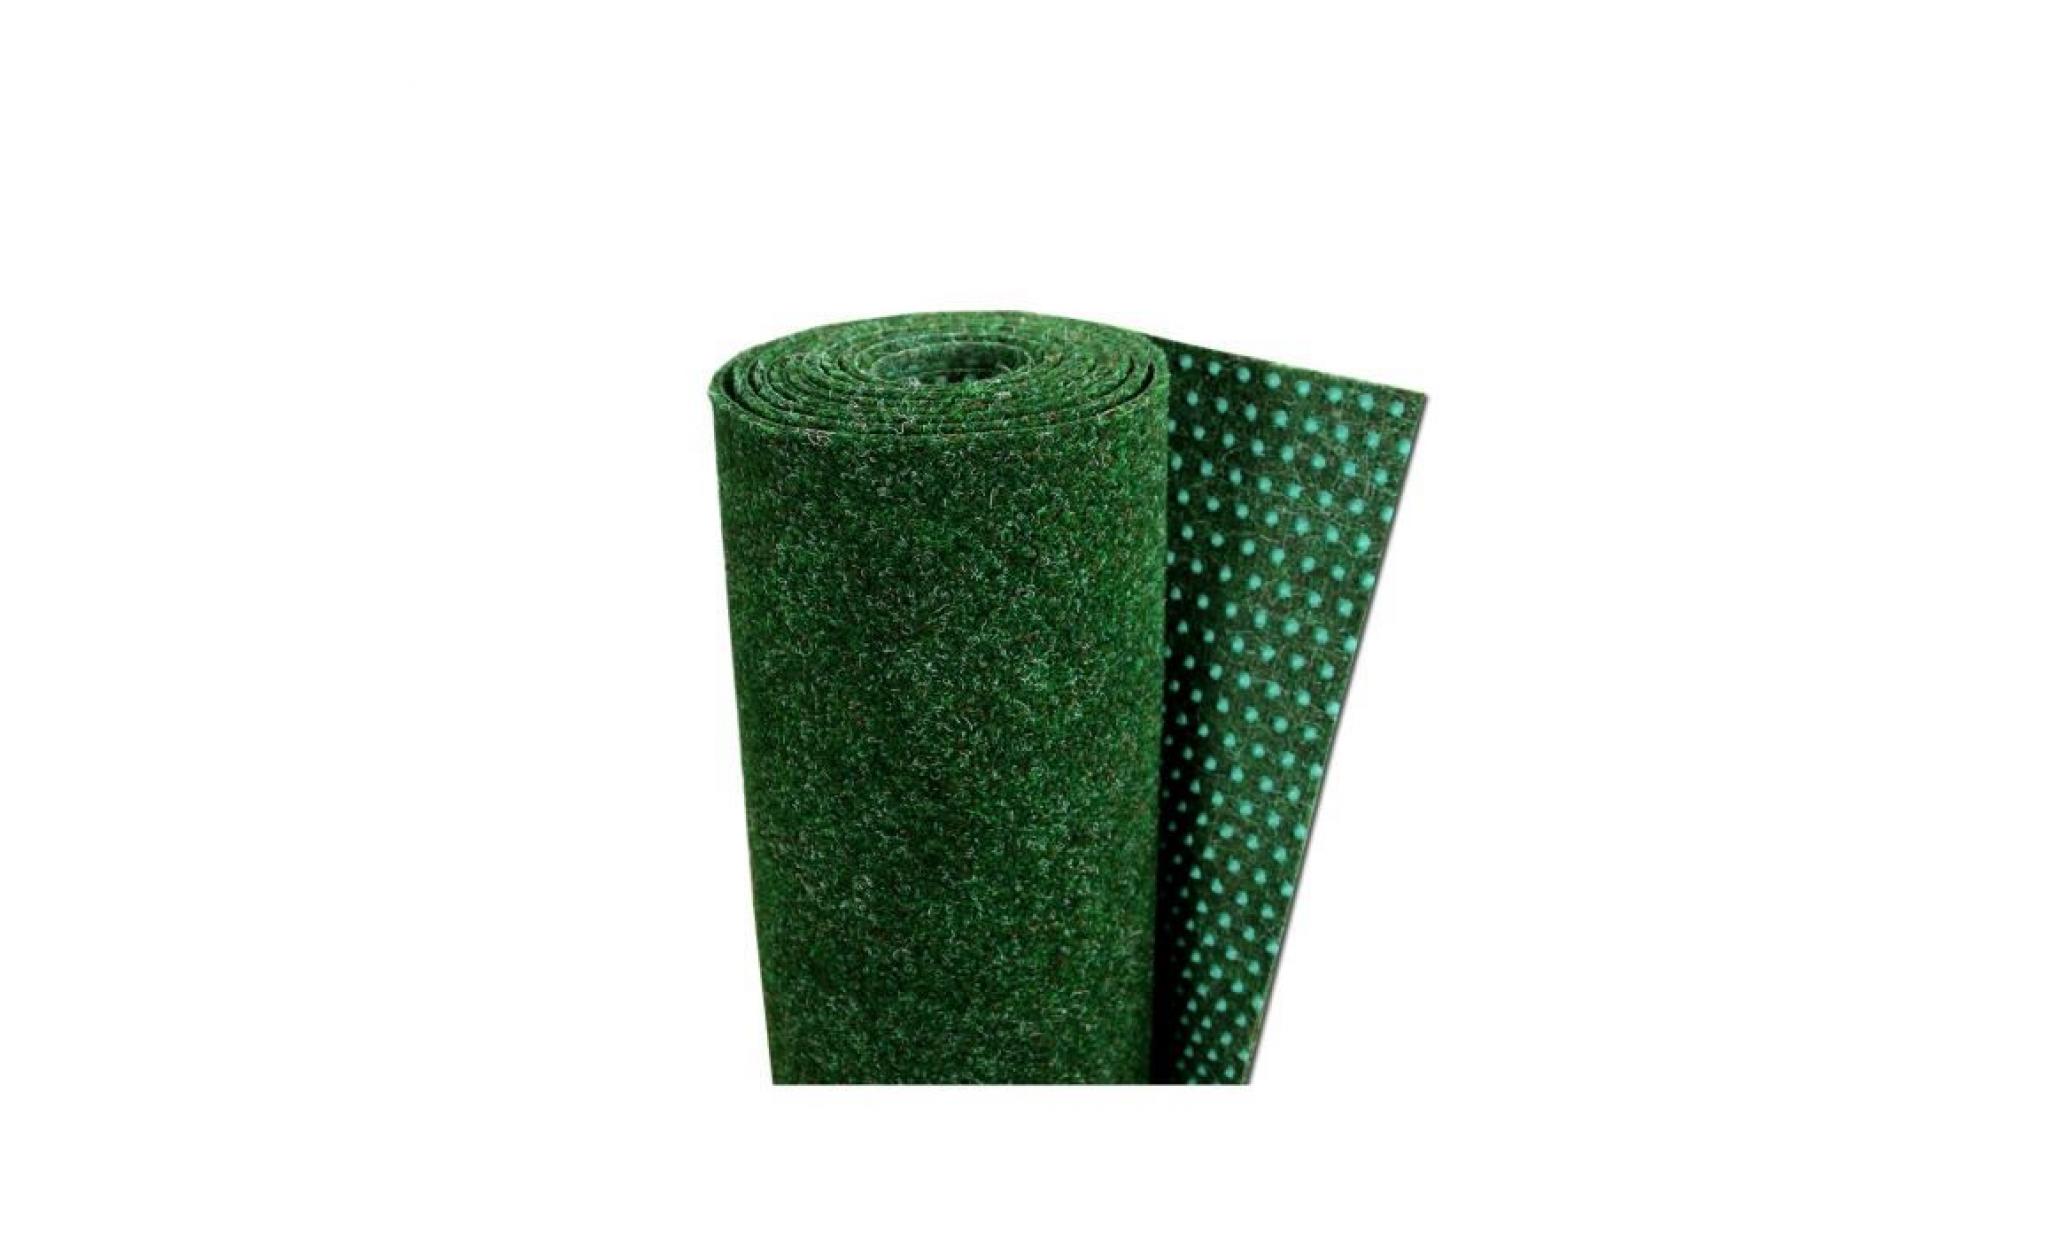 kingston   tapis type gazon artificiel – pour jardin, terrasse, balcon   anthracite [200x400 cm] pas cher